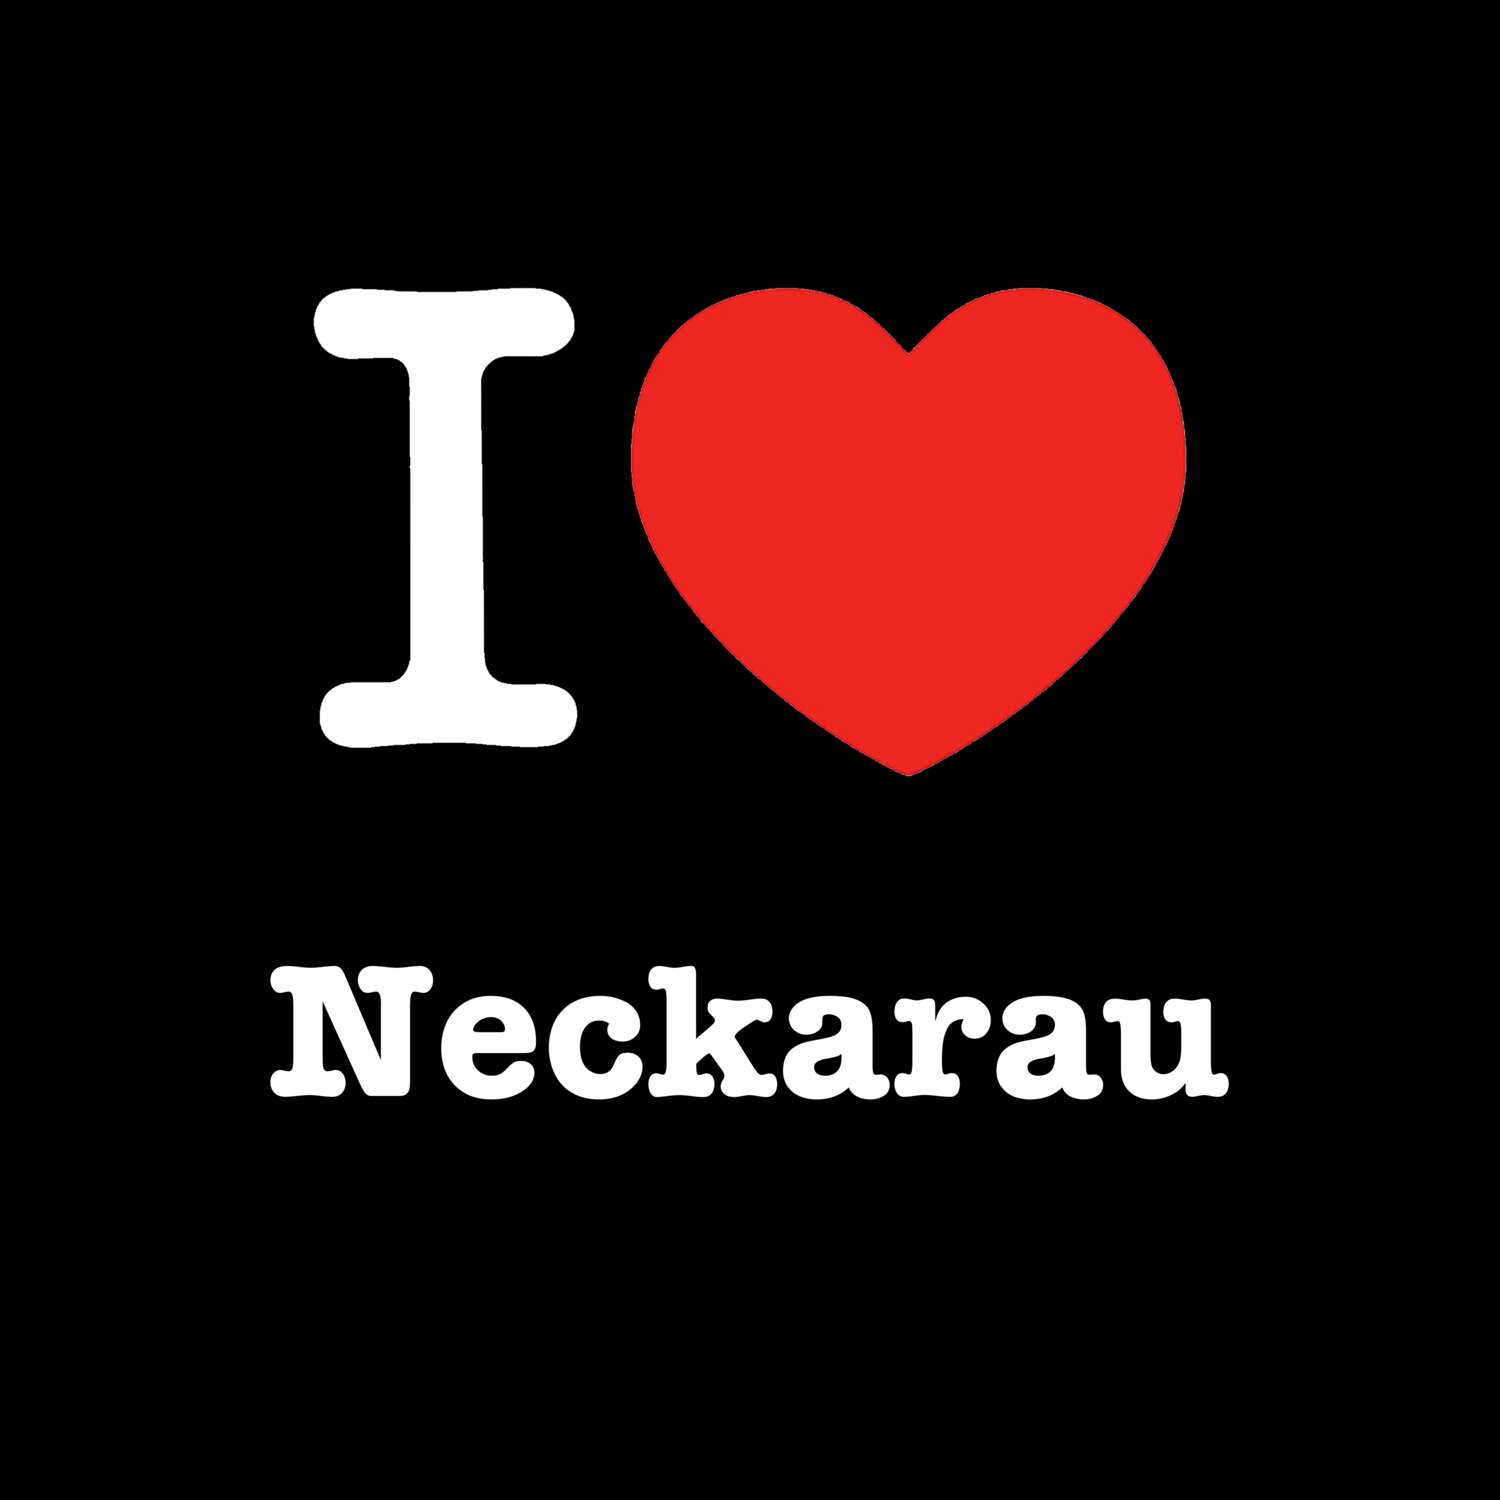 Neckarau T-Shirt »I love«